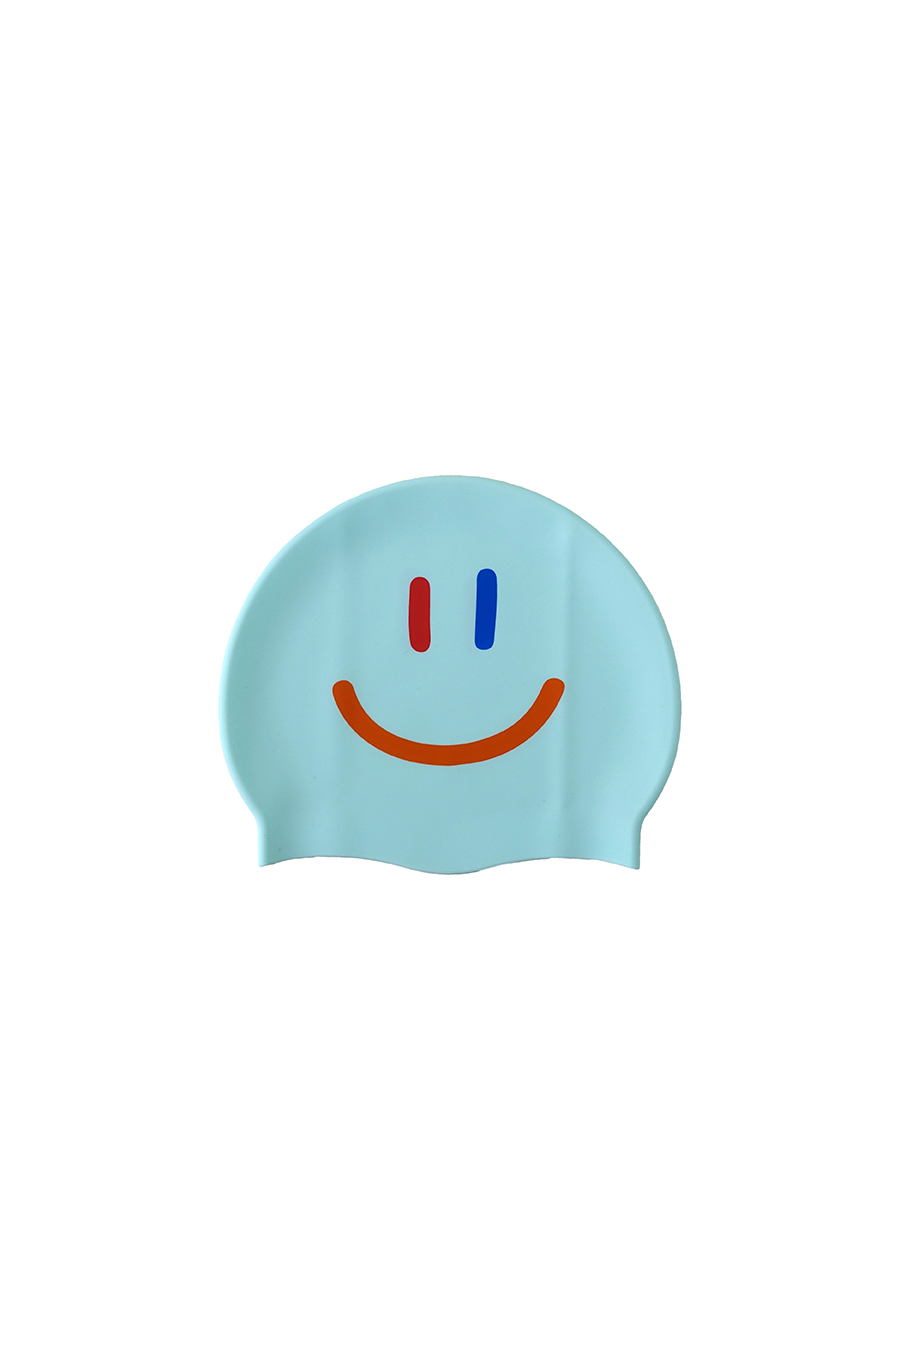 LaLa Swimming Cap [Mint]